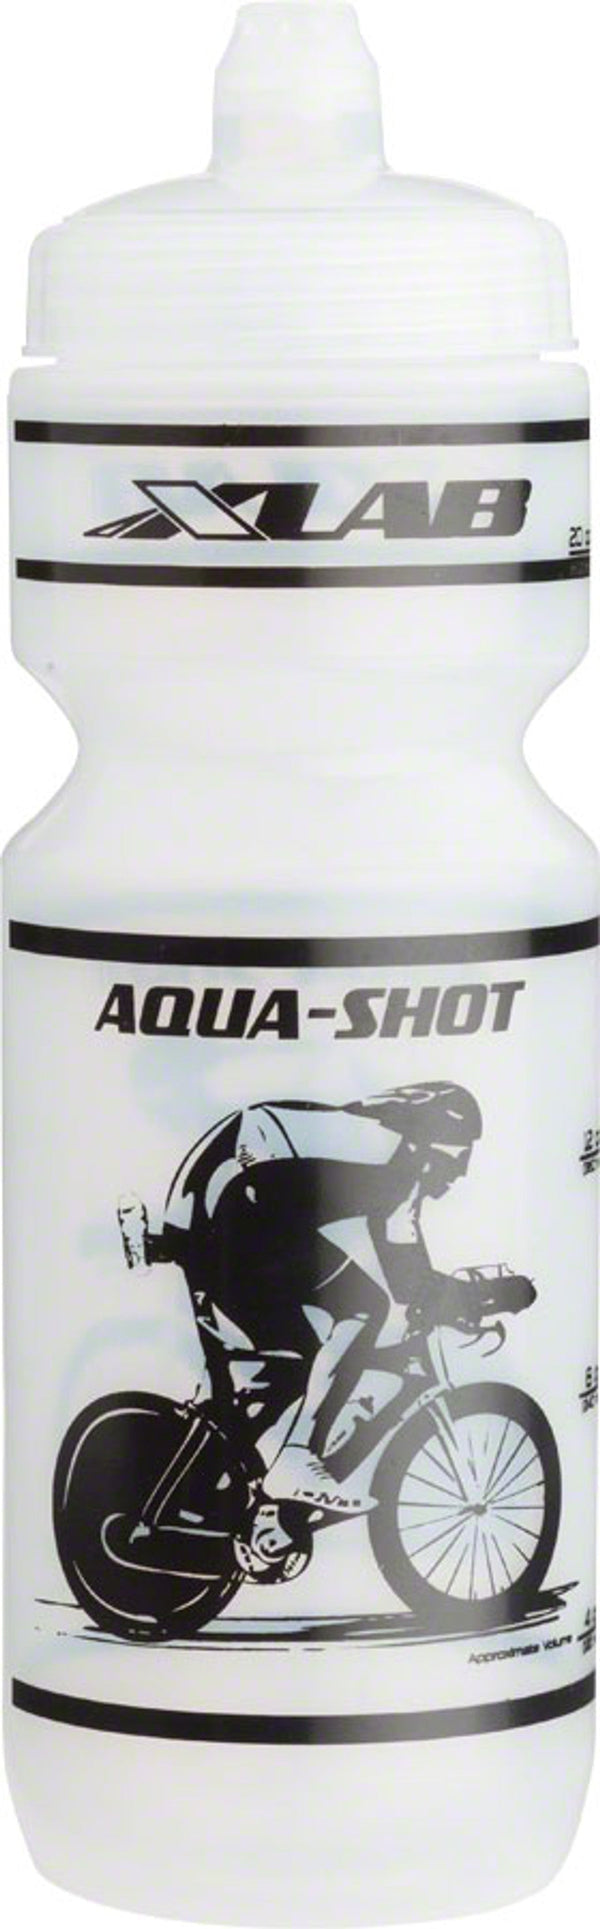 XLab Aqua Shot Water Bottle